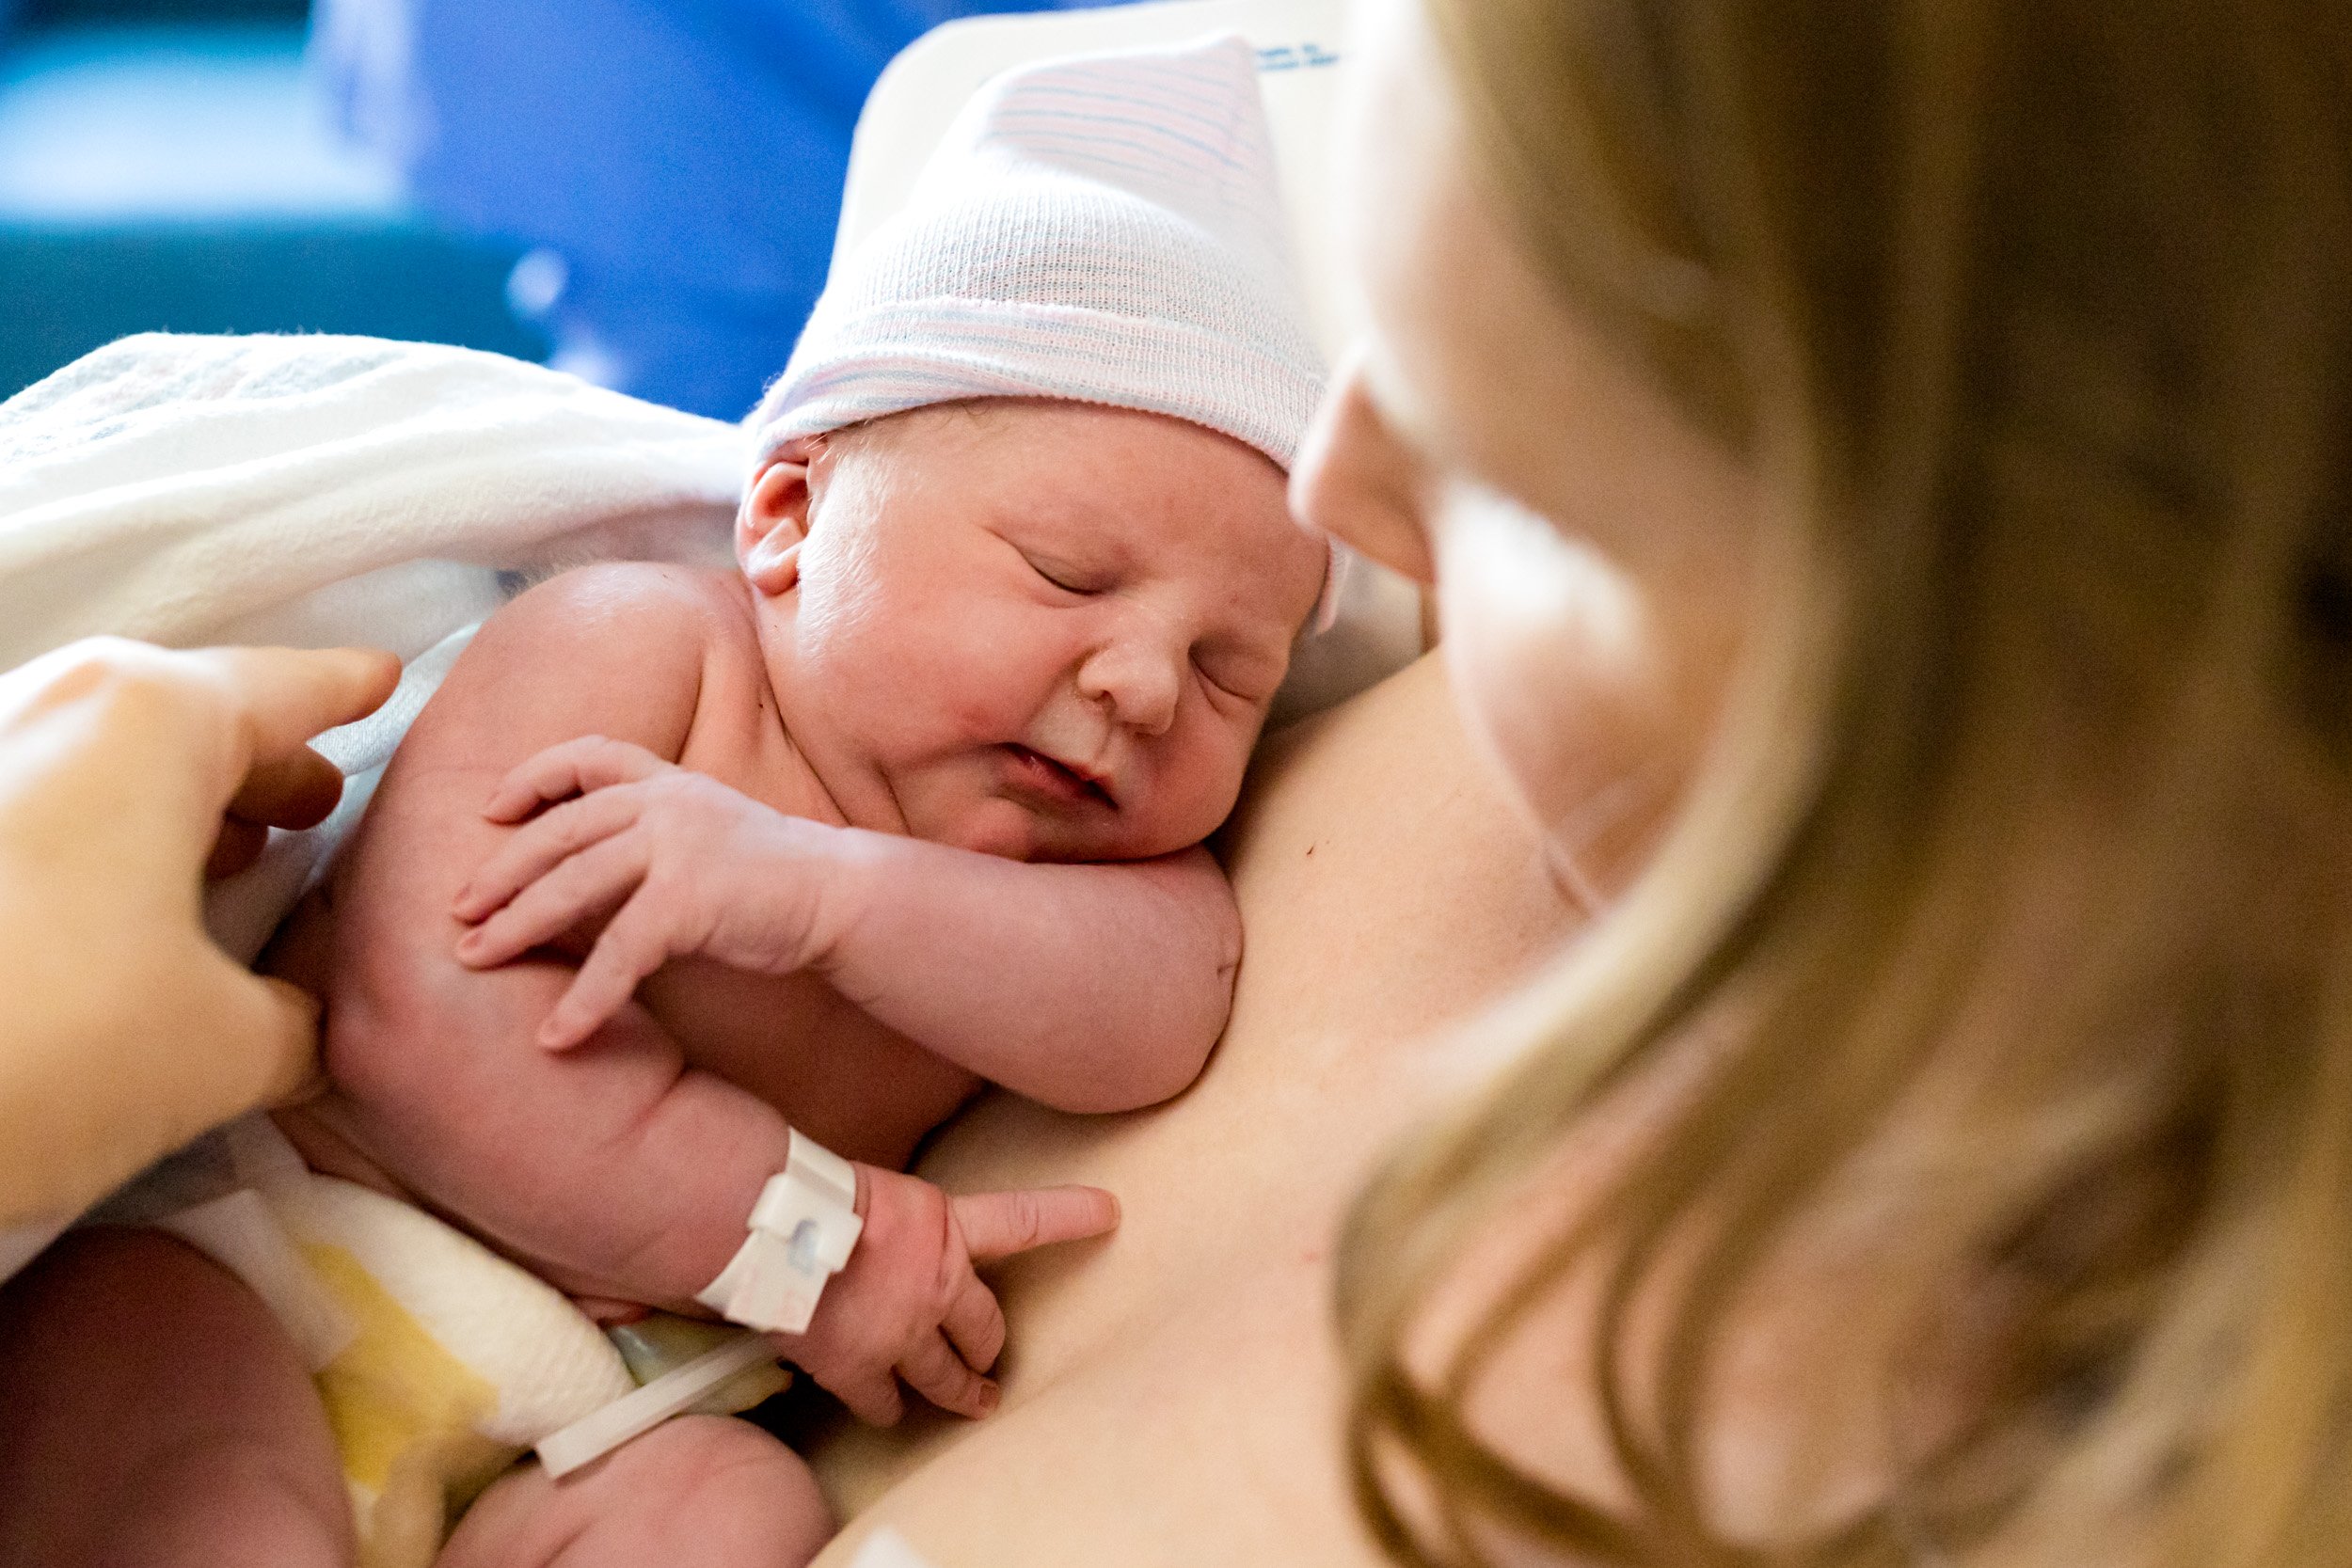 jacksonville mom doing skin-to-skin with her newborn baby